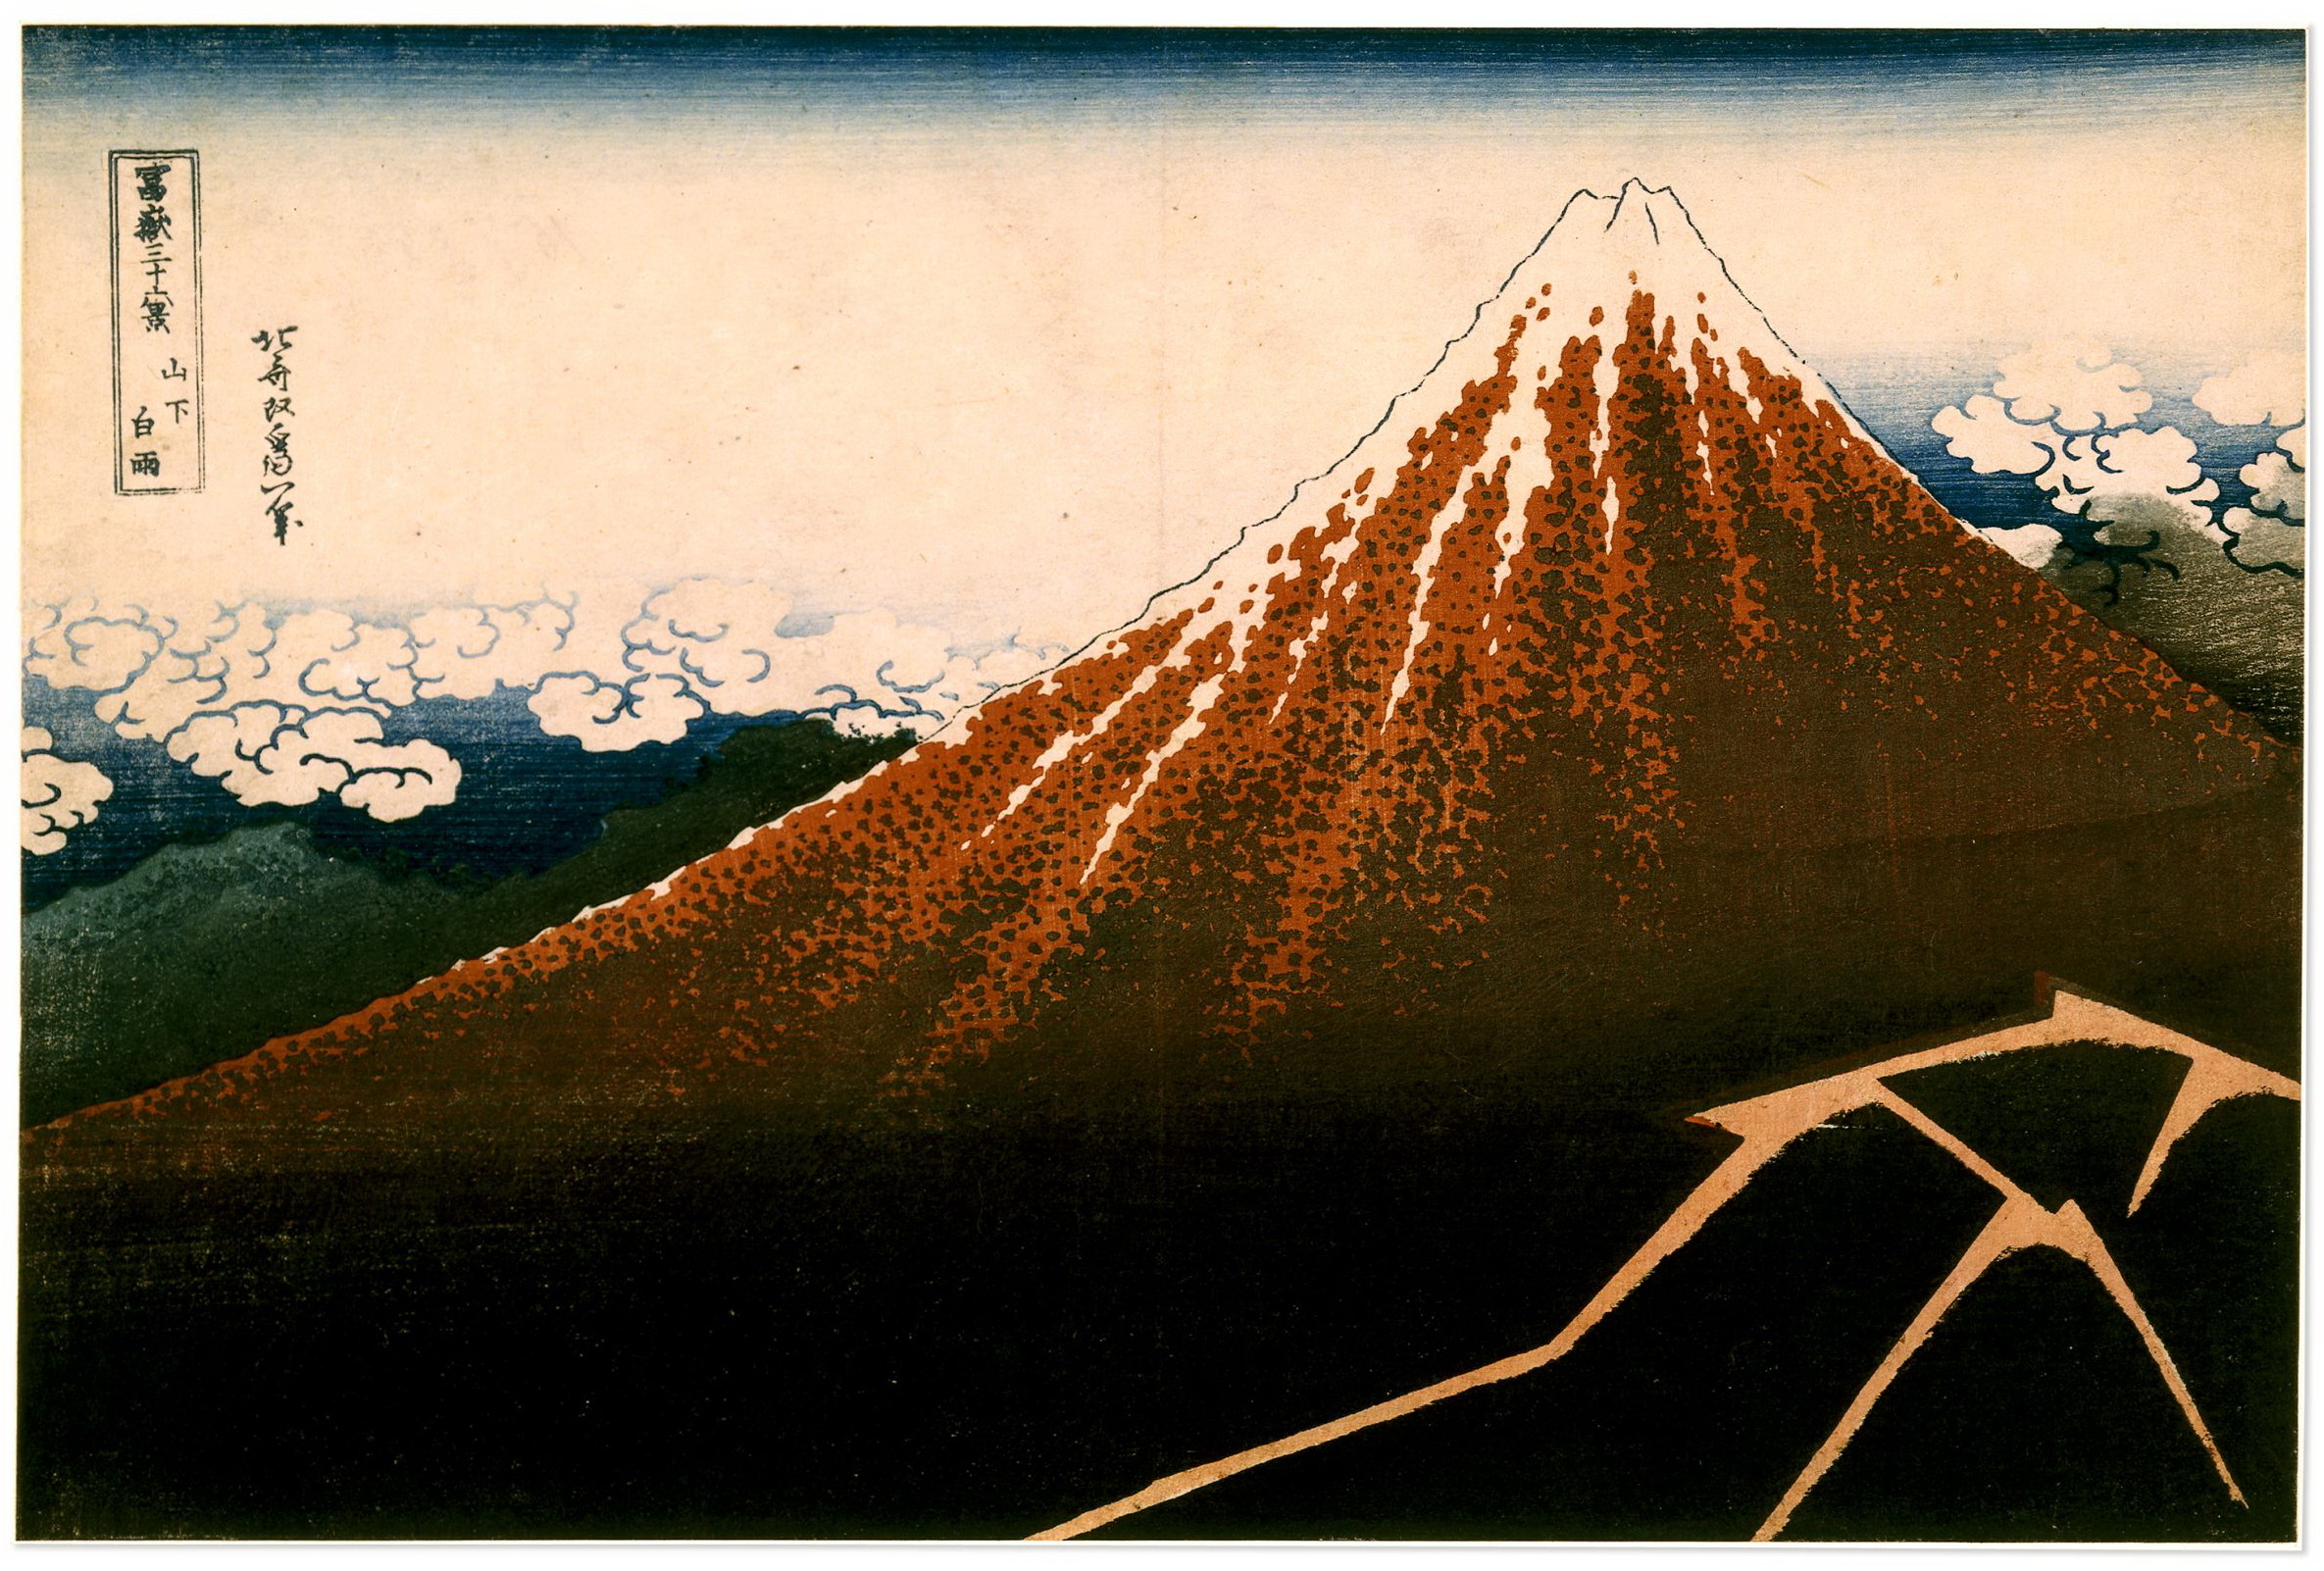 Katsushika Hokusai. Storm below Mount Fuji, from the series Thirty-six Views of Mount Fuji